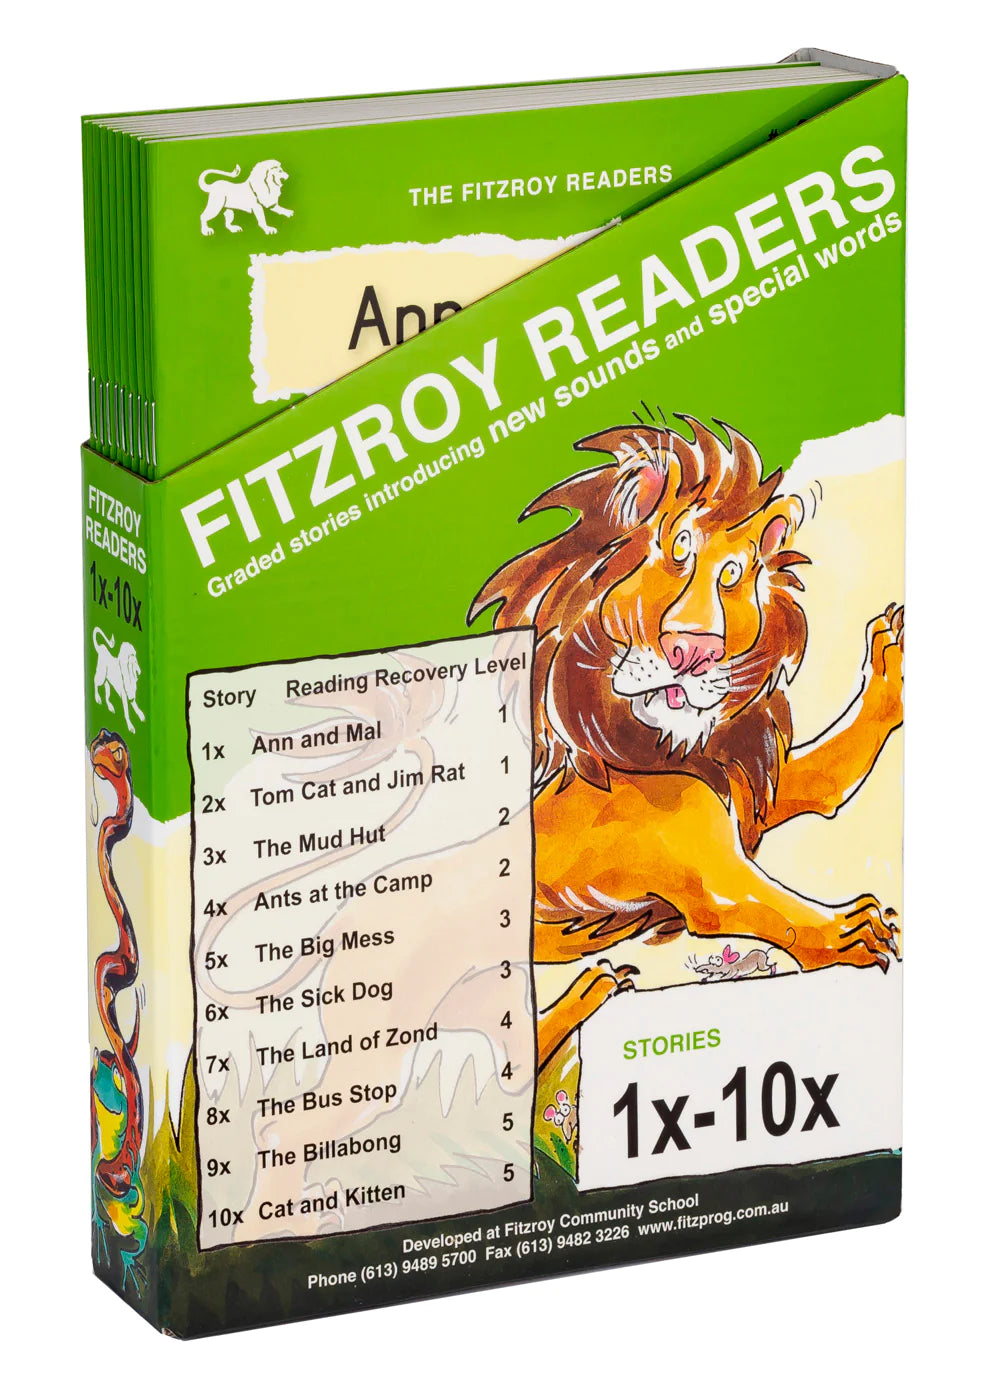 Fitzroy Readers 1x-10x (10 Titles)